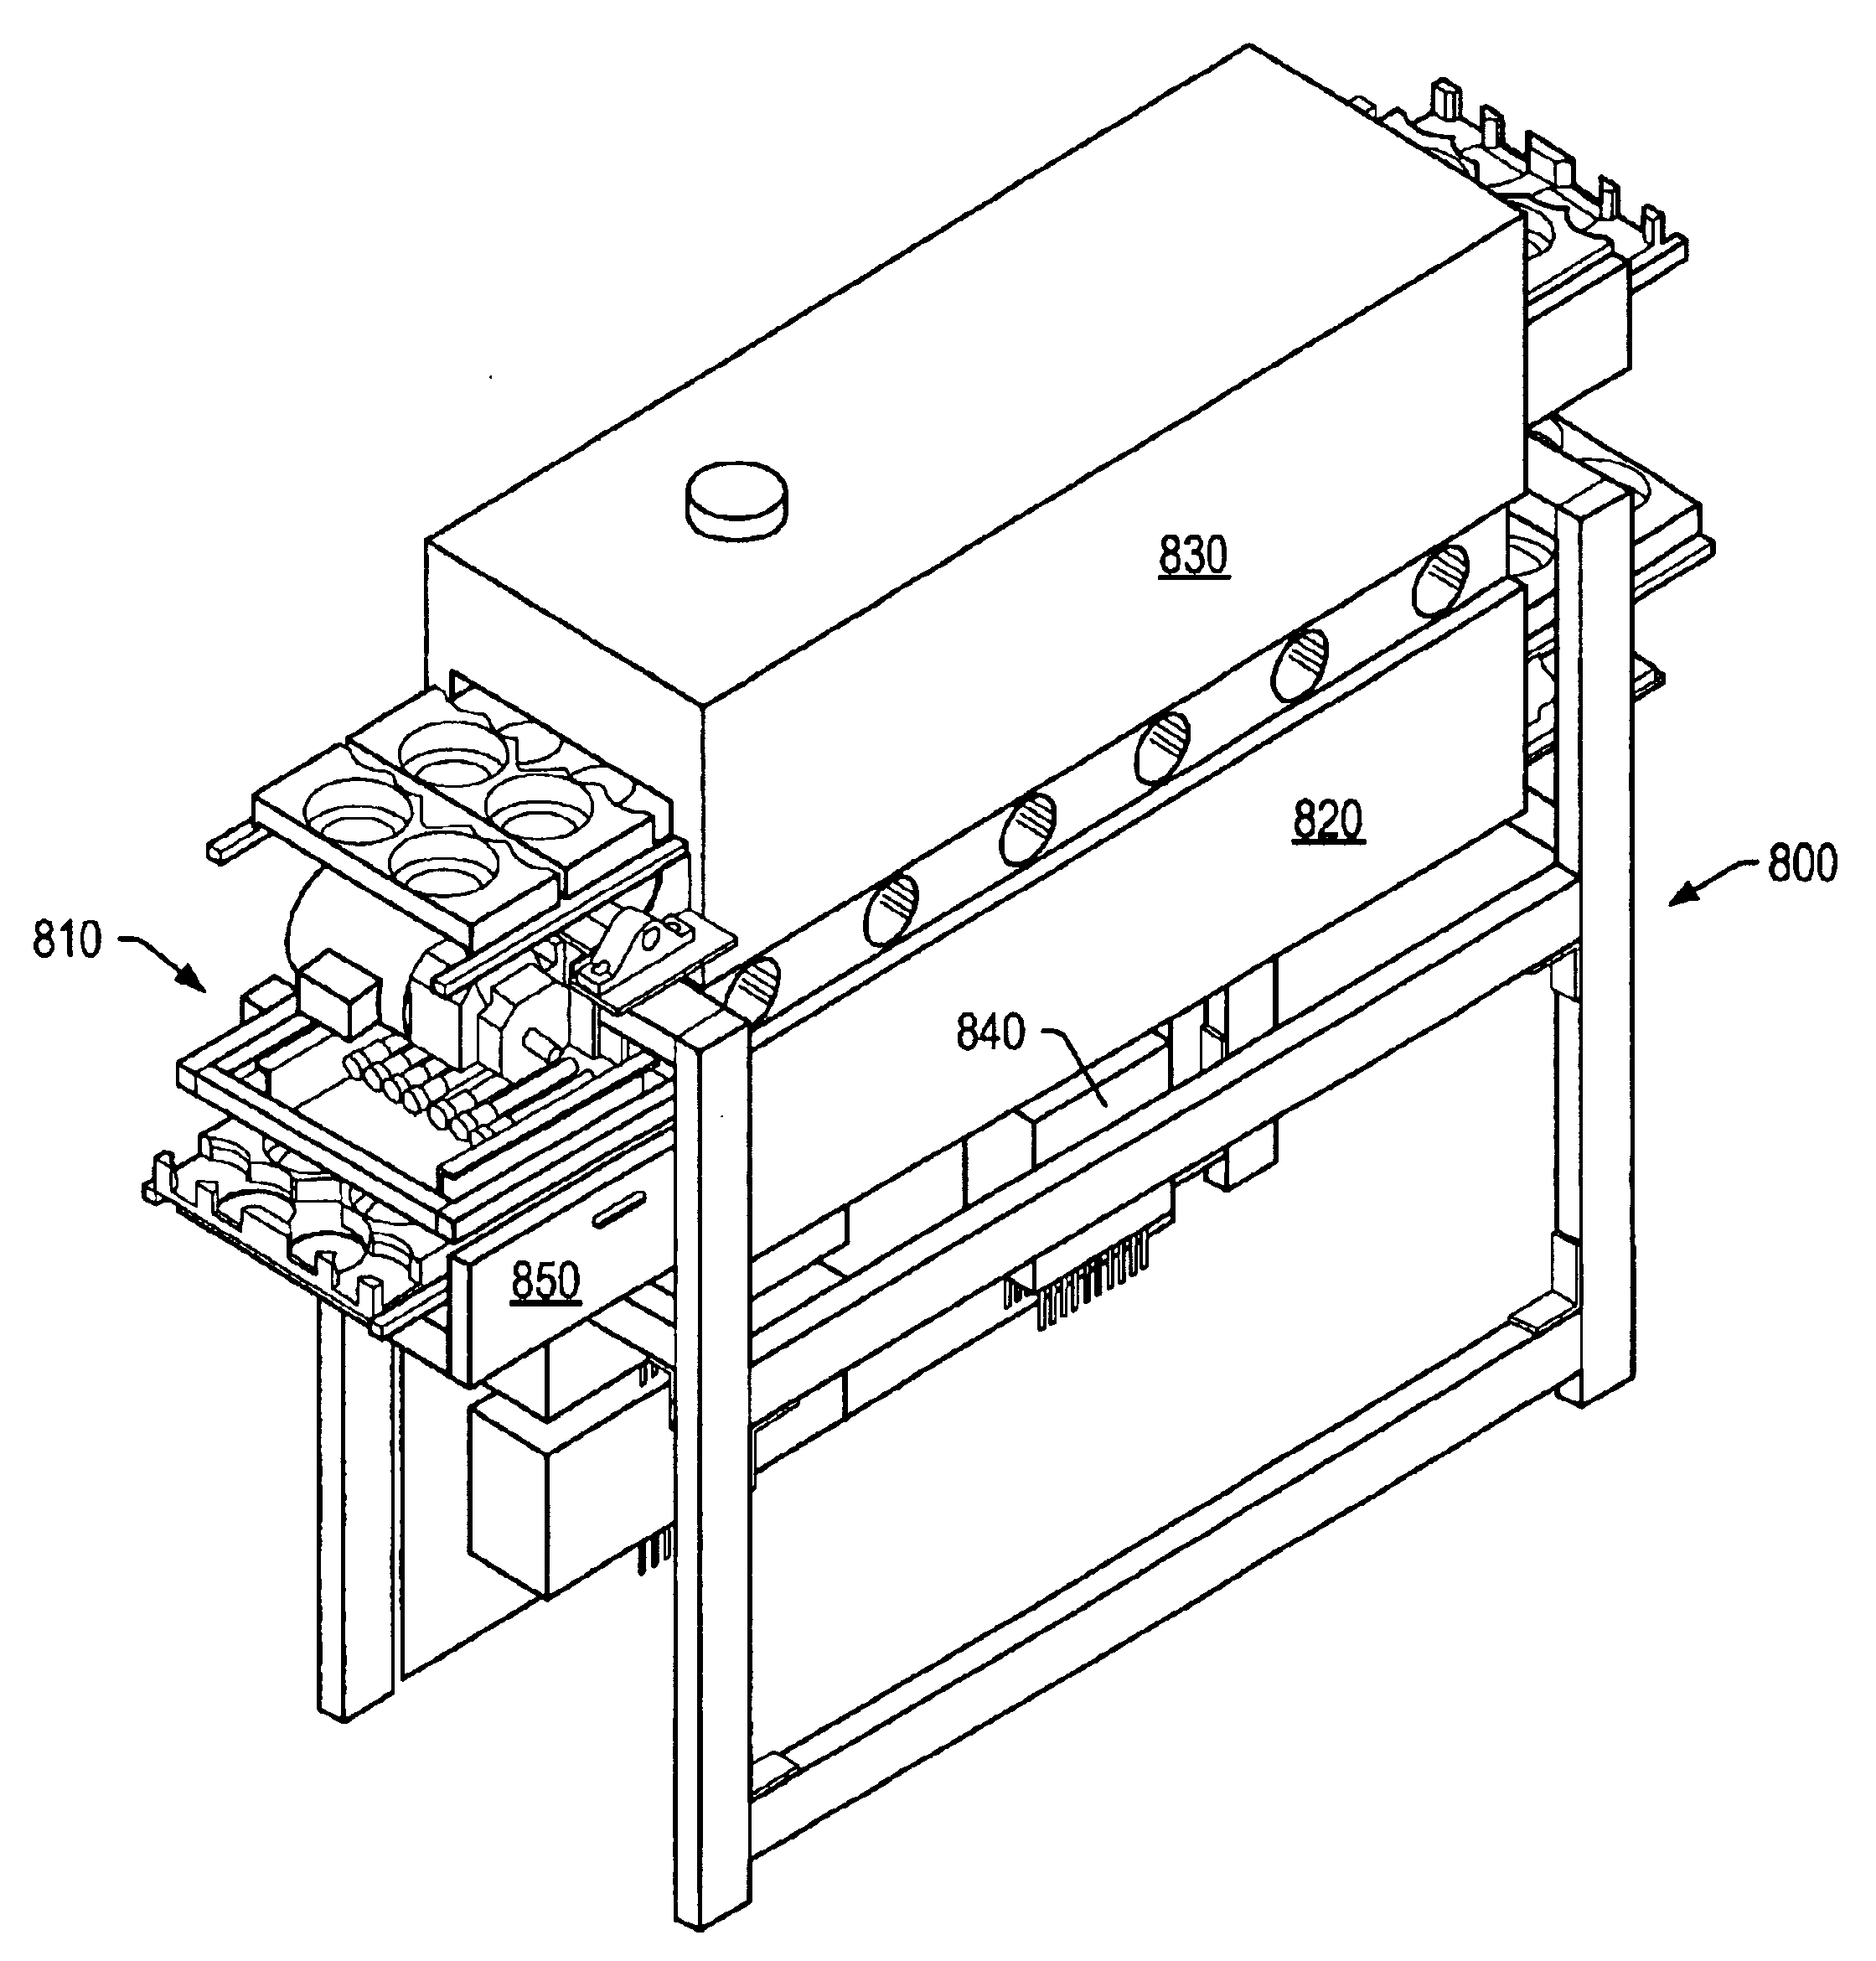 Apparatus for preparing an eyeglass lens having a computer system controller